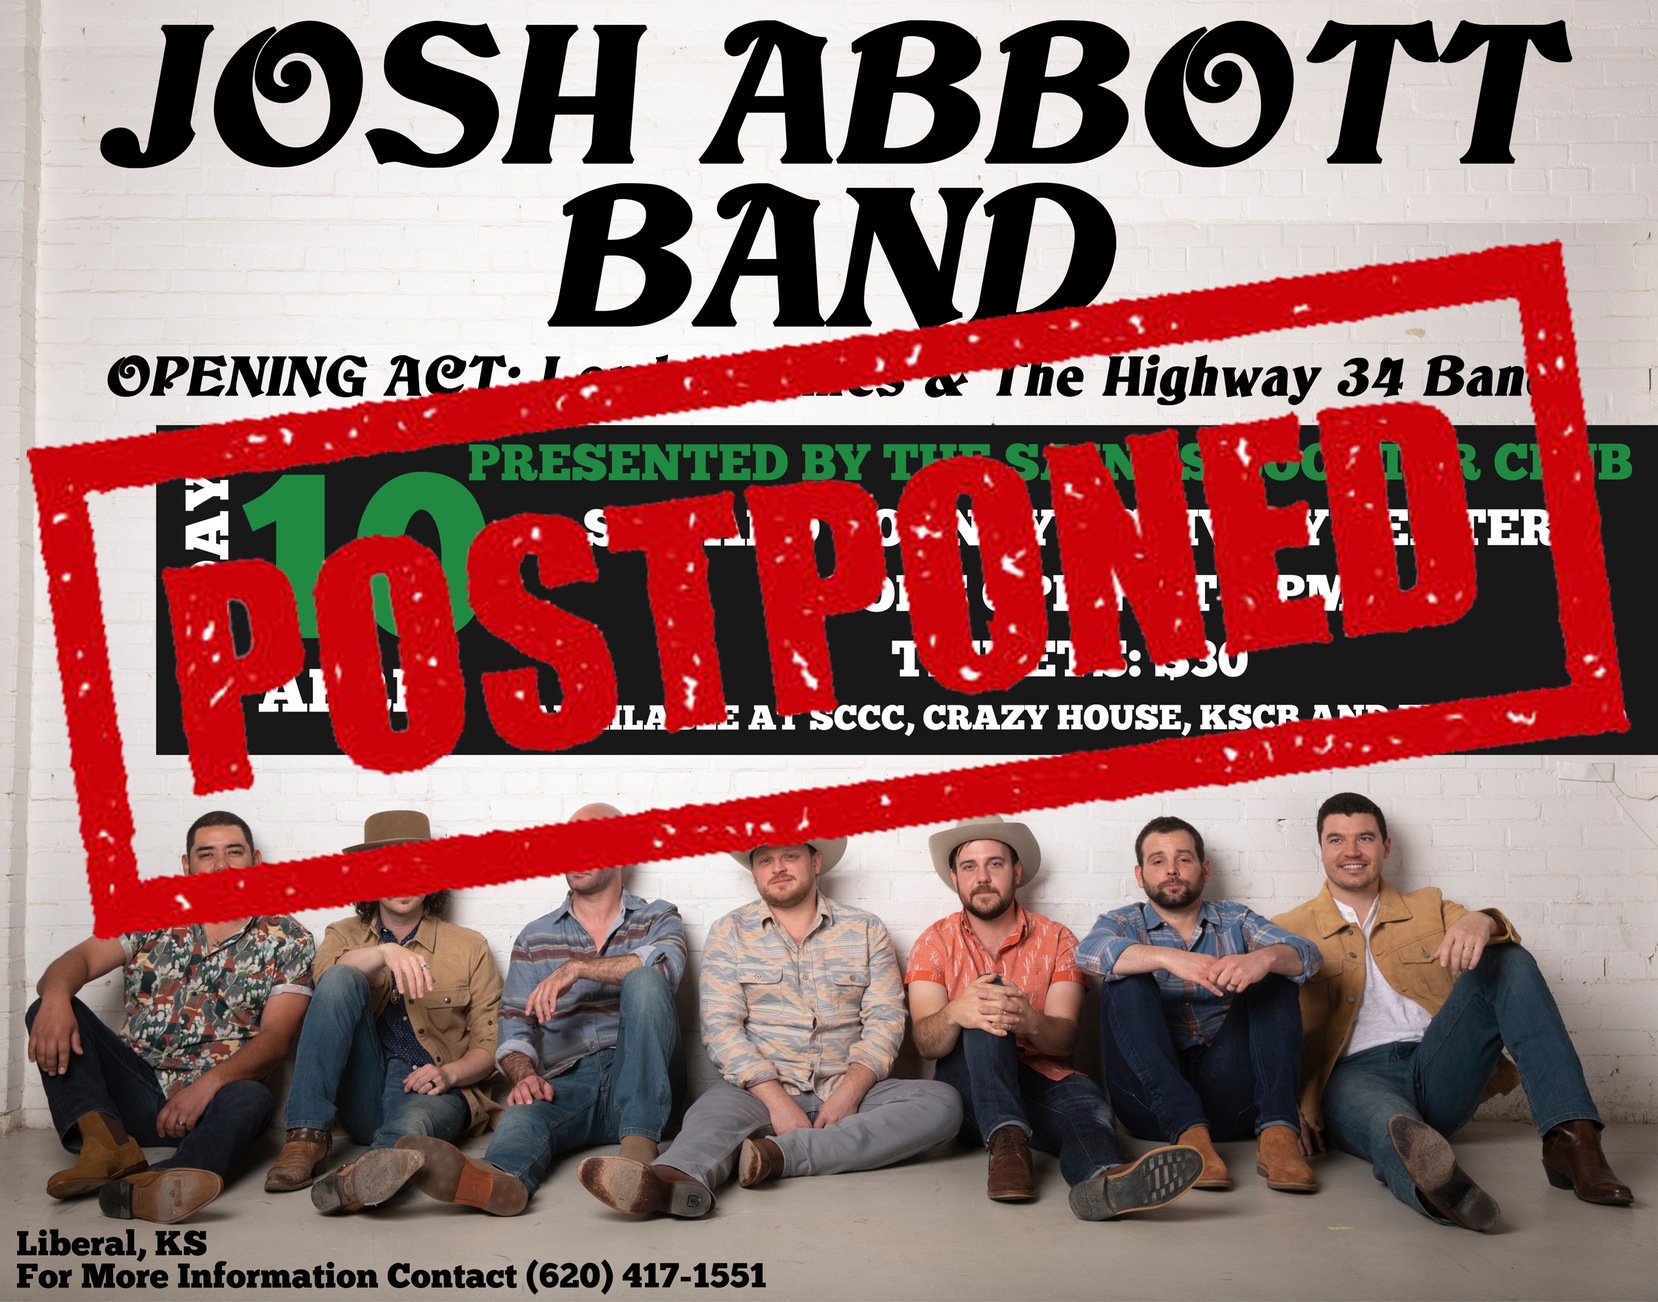 Josh Abbott Band Concert postponed